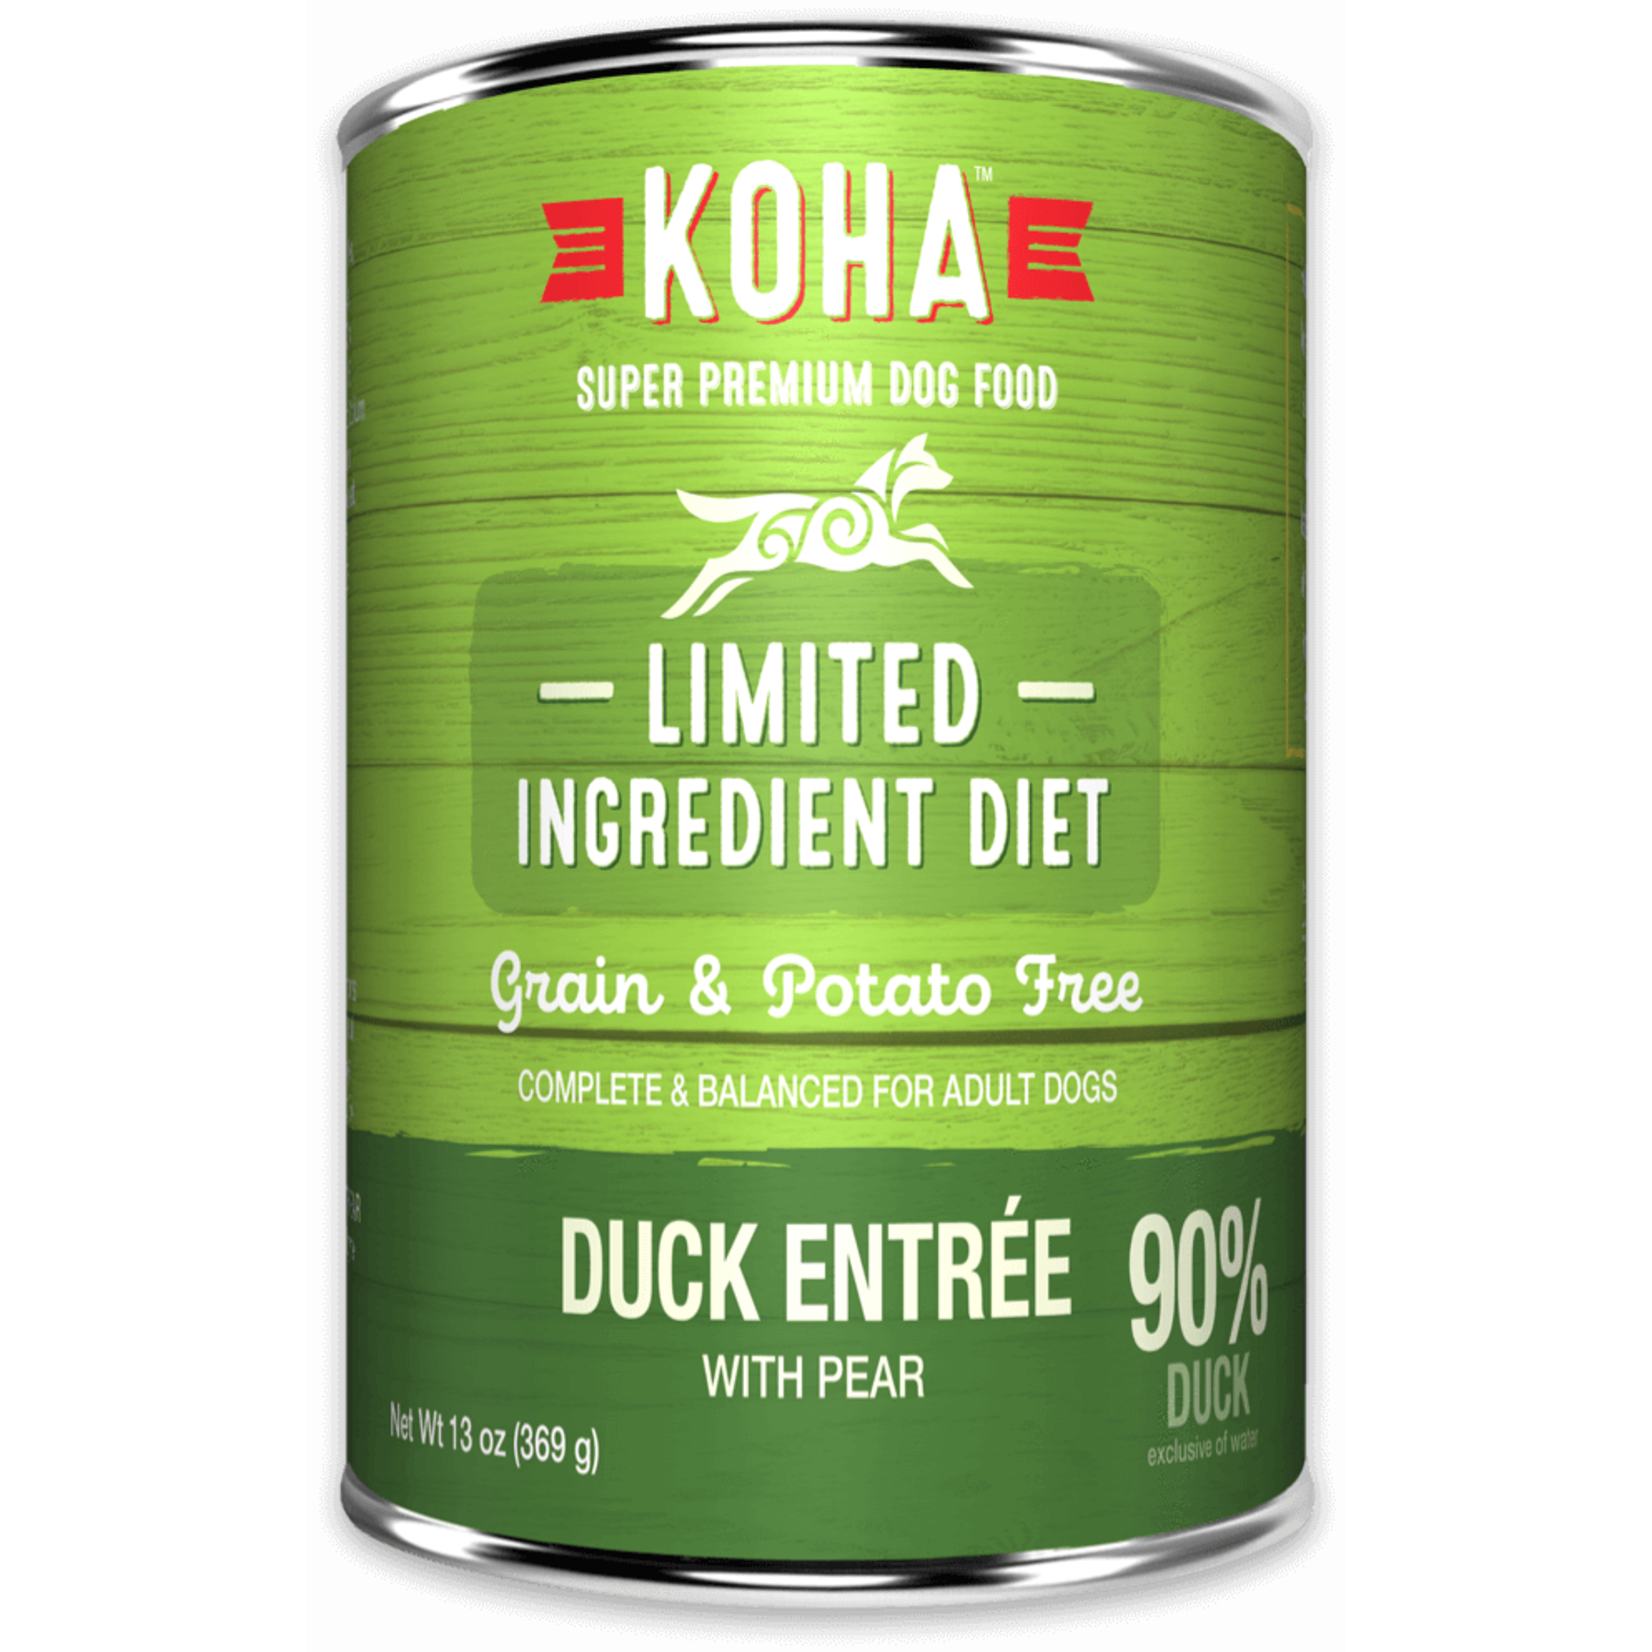 Koha Limited Ingredient Diet Duck Entrée for Dogs